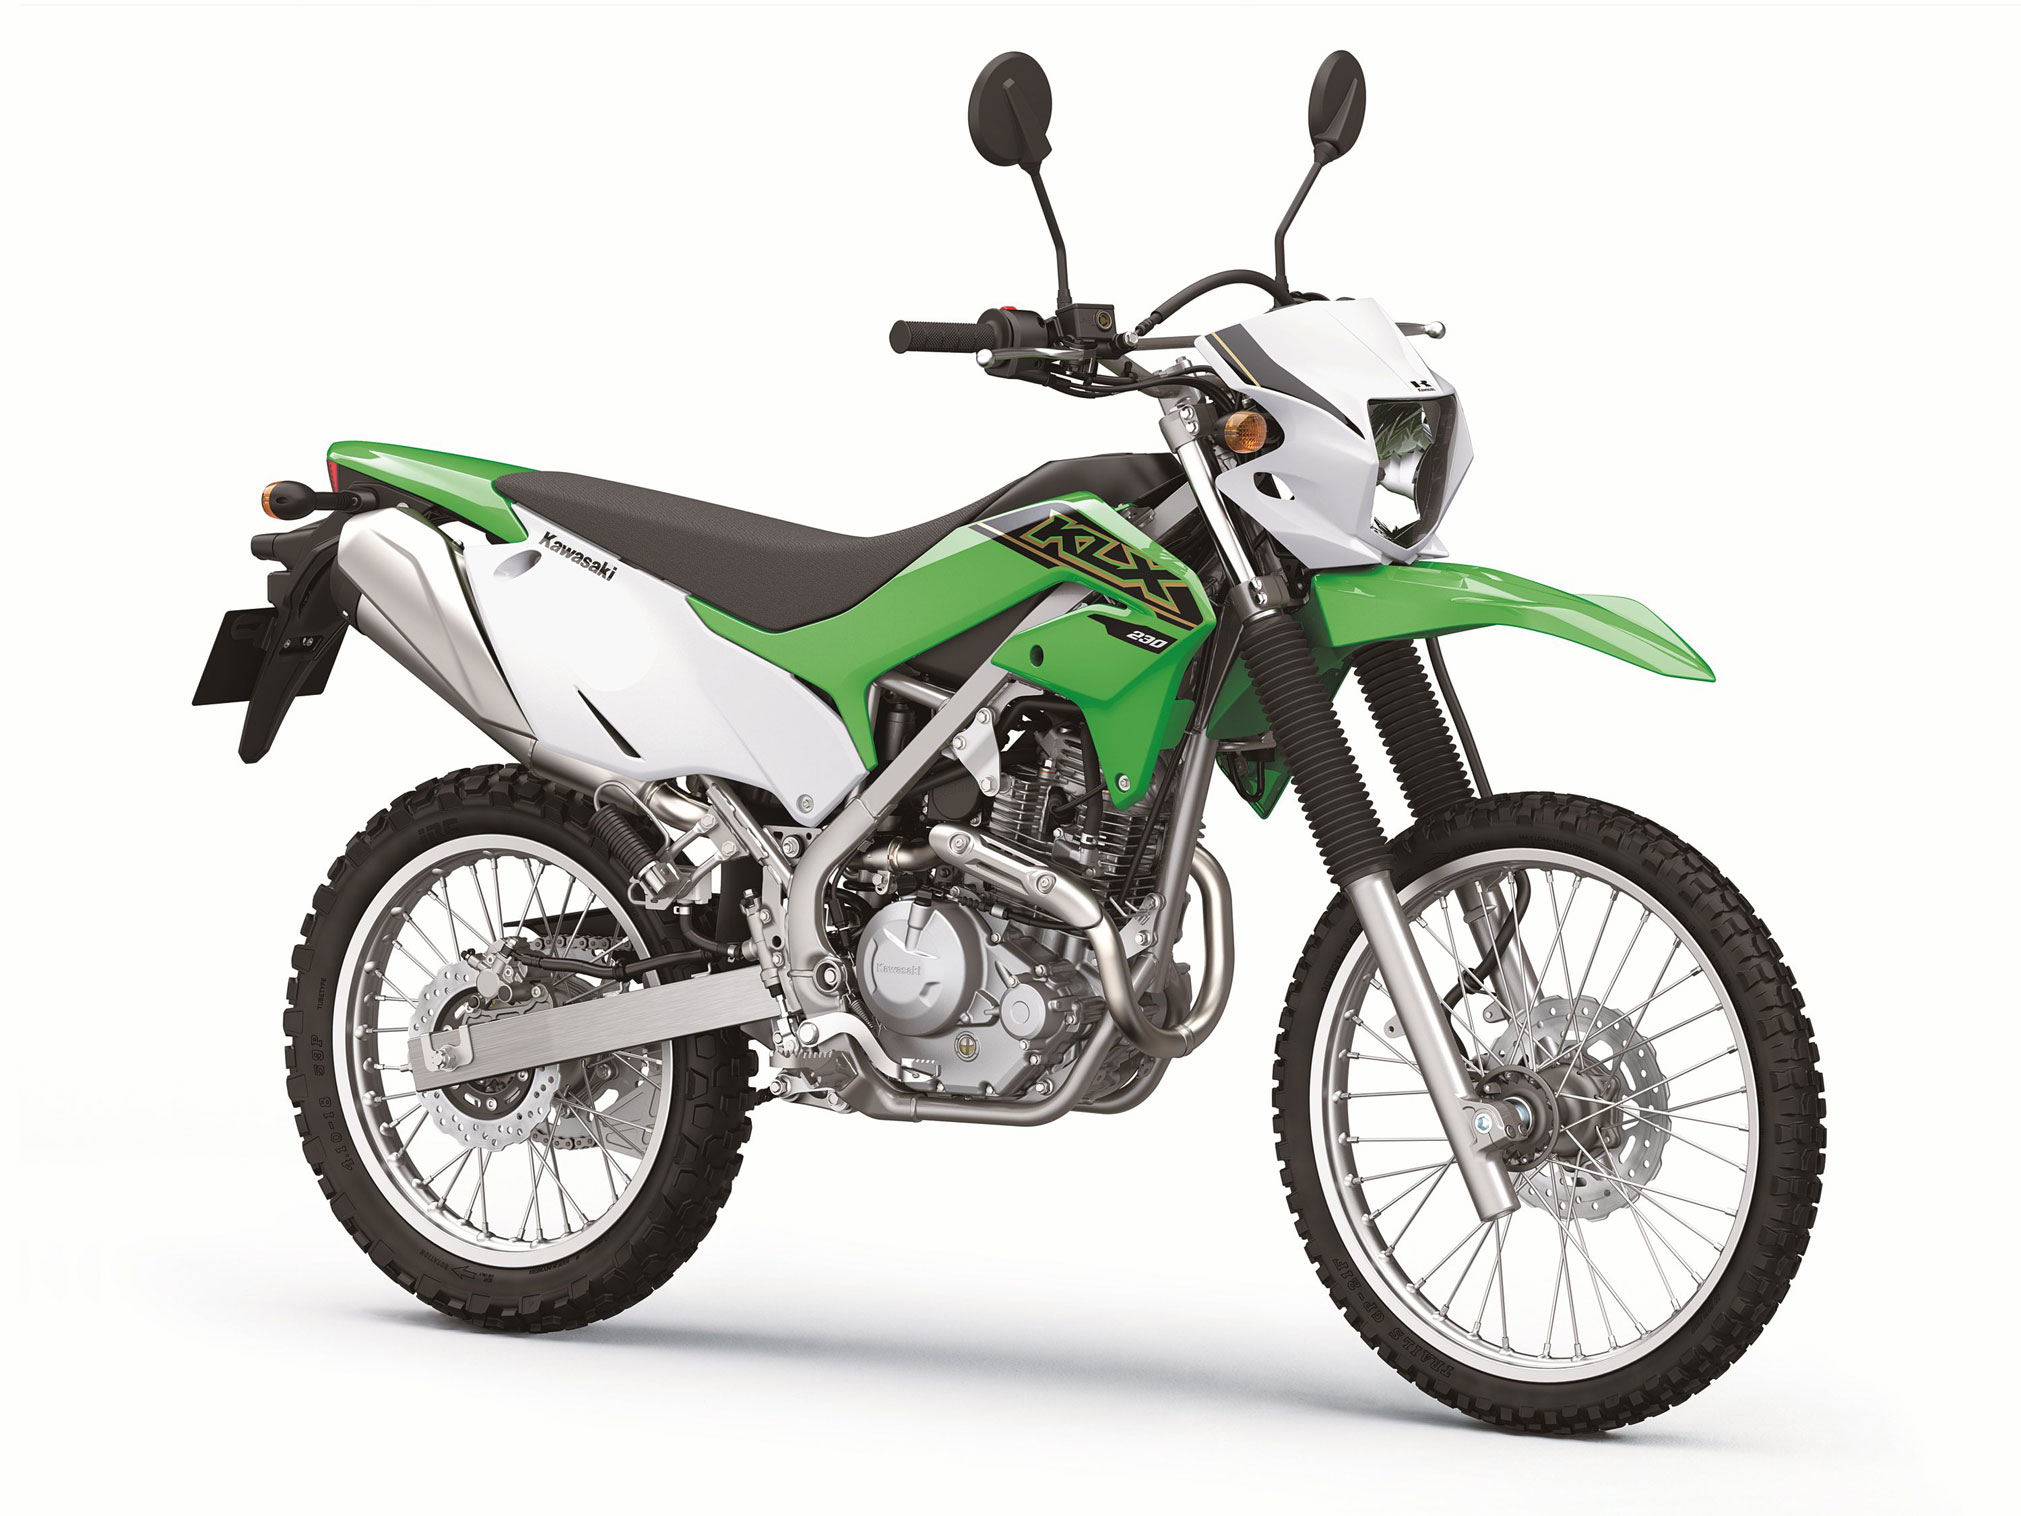 2021 Kawasaki KLX230 ABS Guide • Total Motorcycle